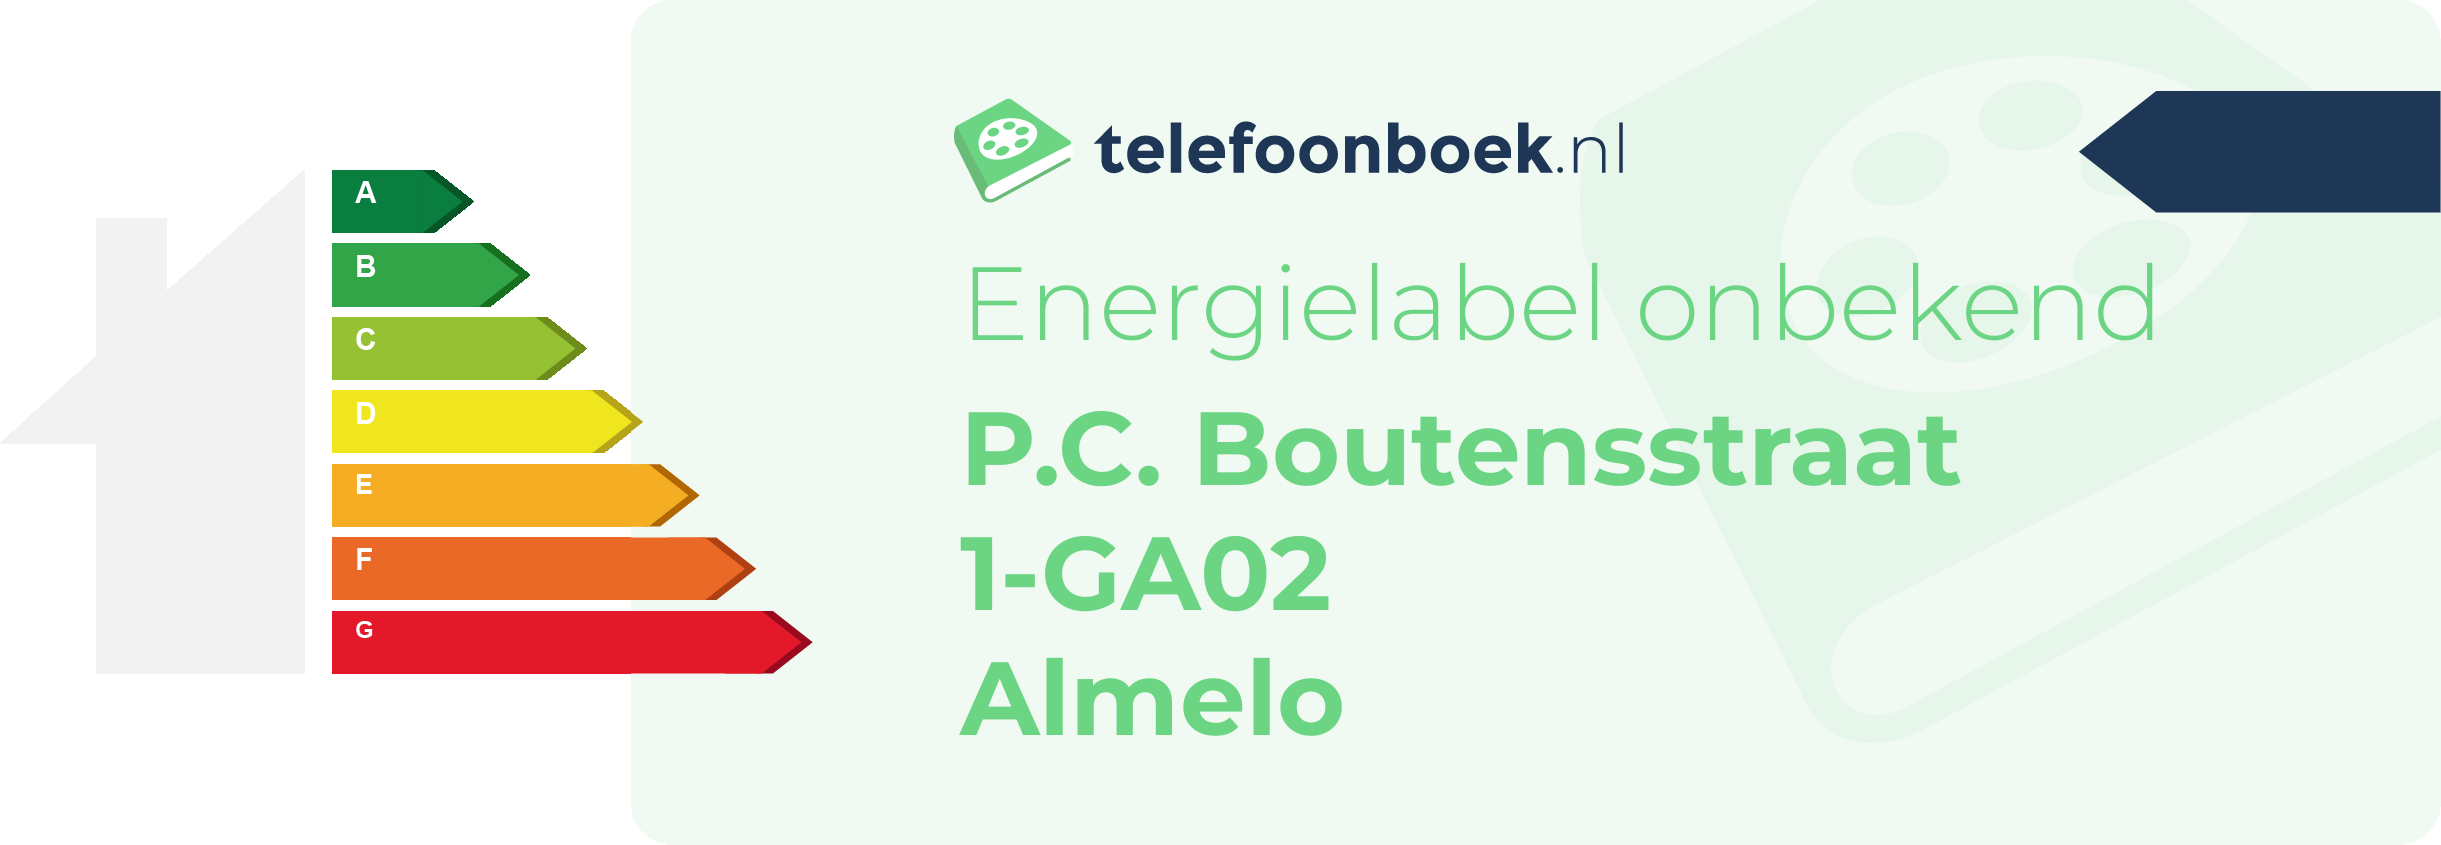 Energielabel P.C. Boutensstraat 1-GA02 Almelo